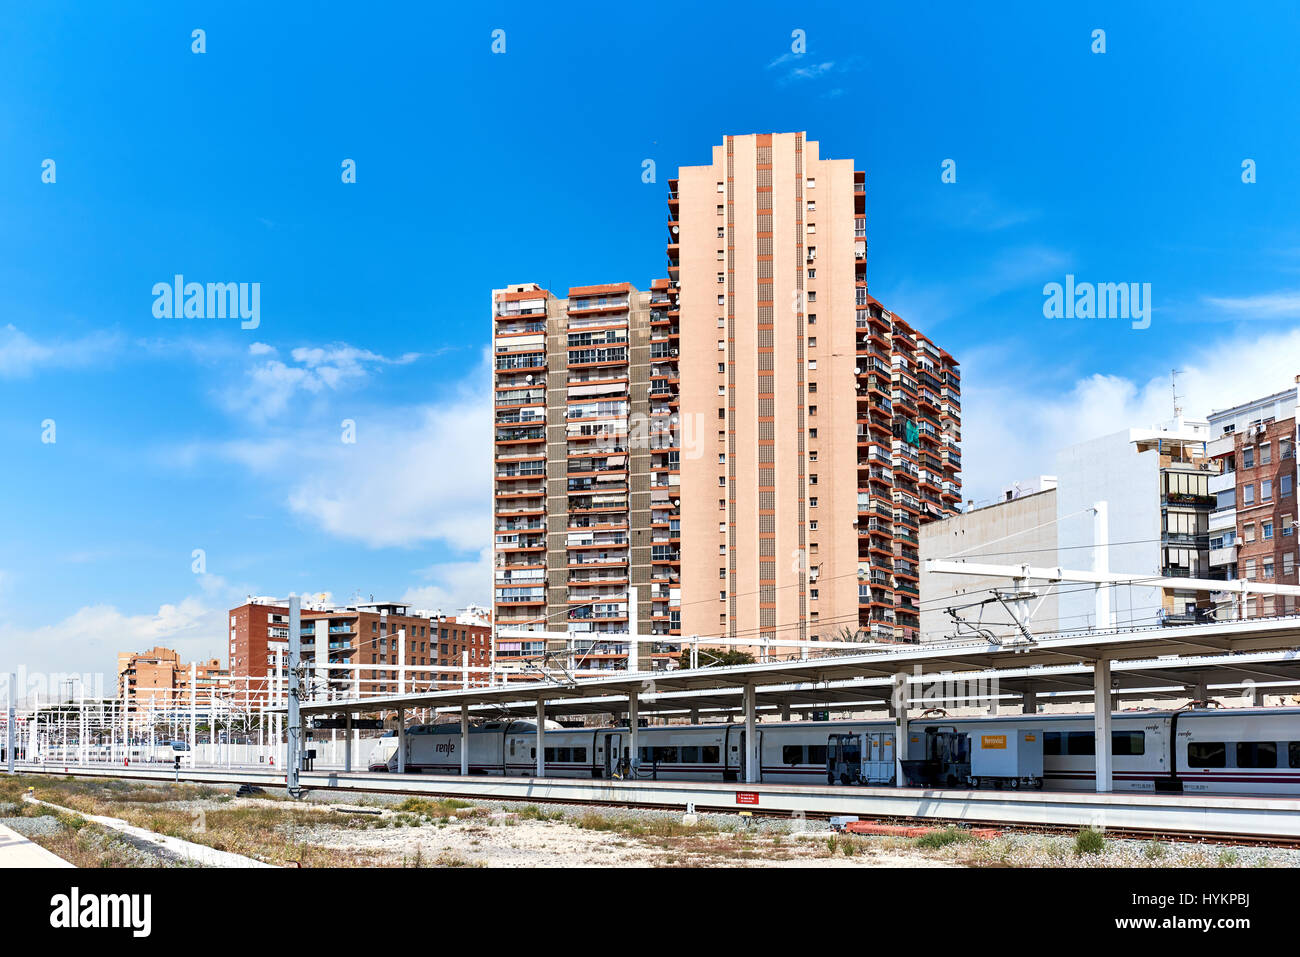 Alicante, España - 31 de marzo de 2017: estación de tren de Alicante. La principal empresa nacional de ferrocarriles de España Renfe. Costa Blanca. España Foto de stock